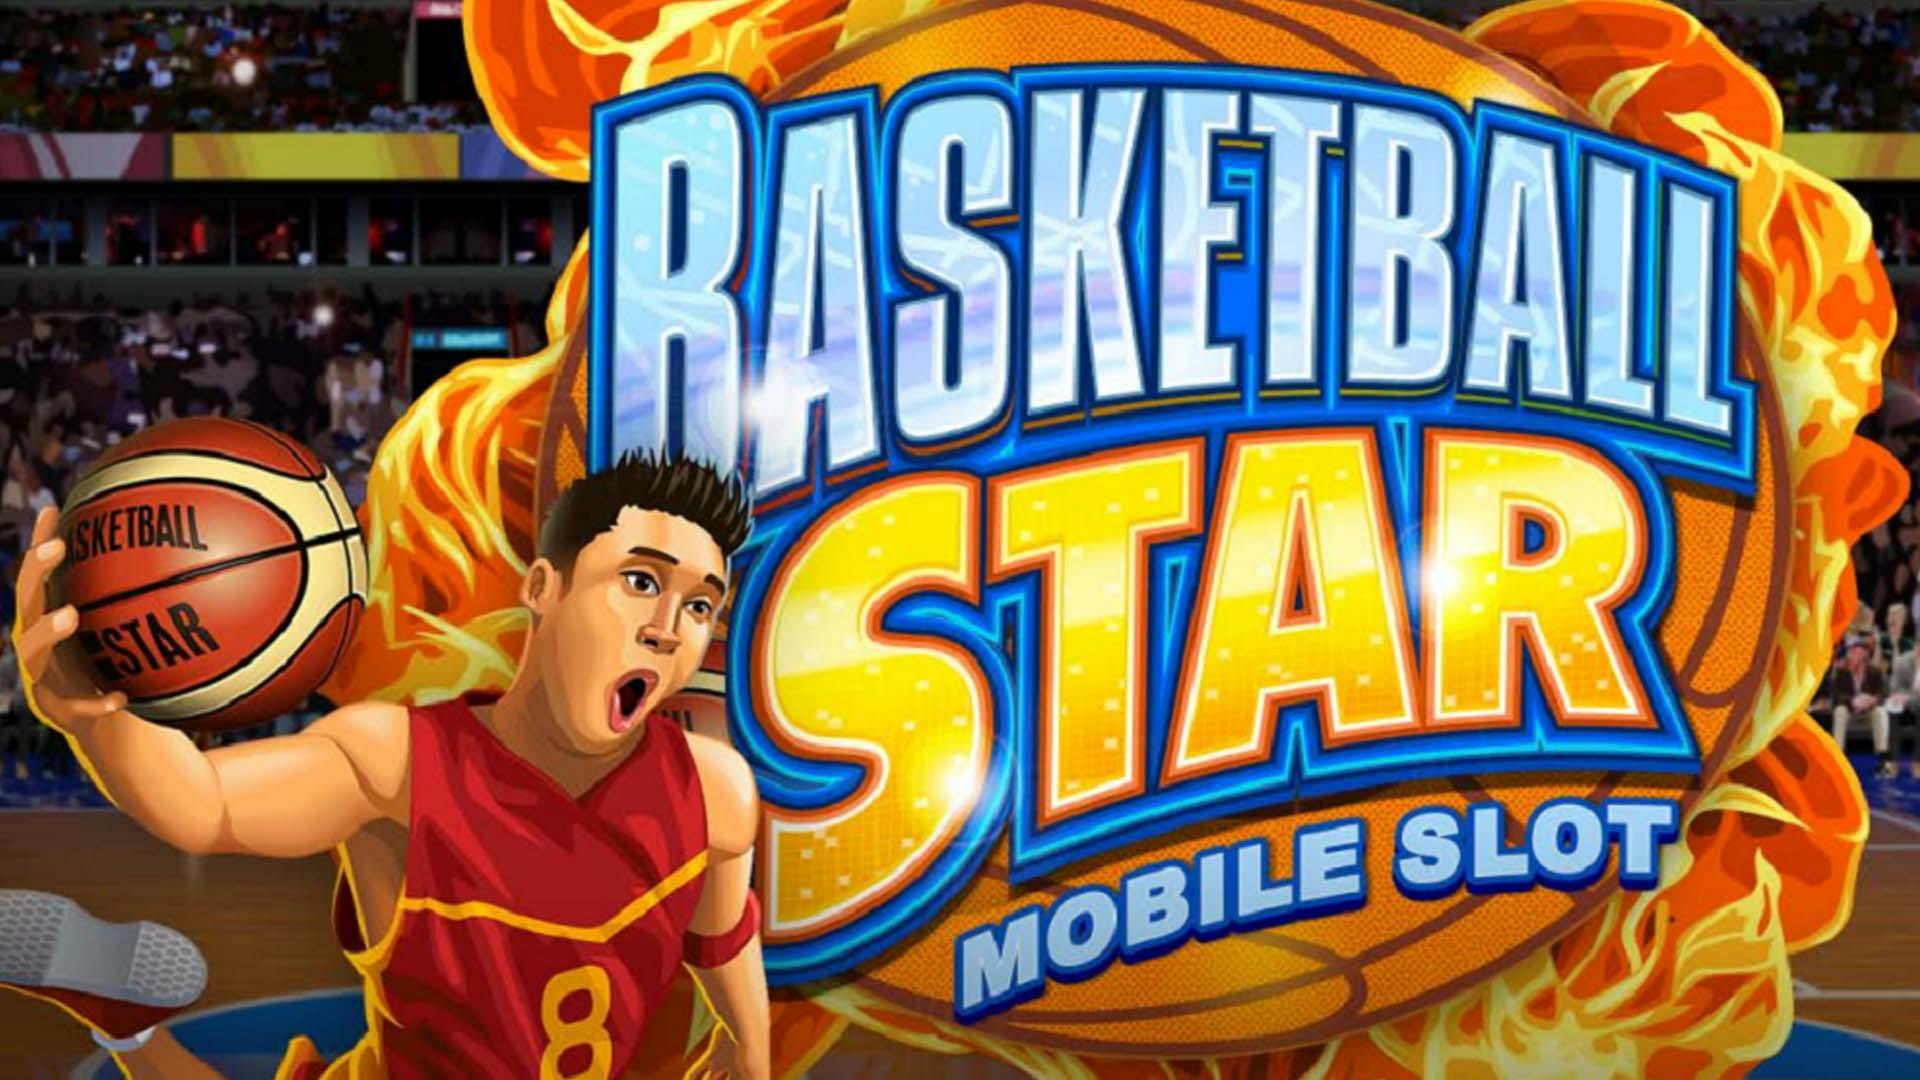 Basketball Star Slot Machine Basket